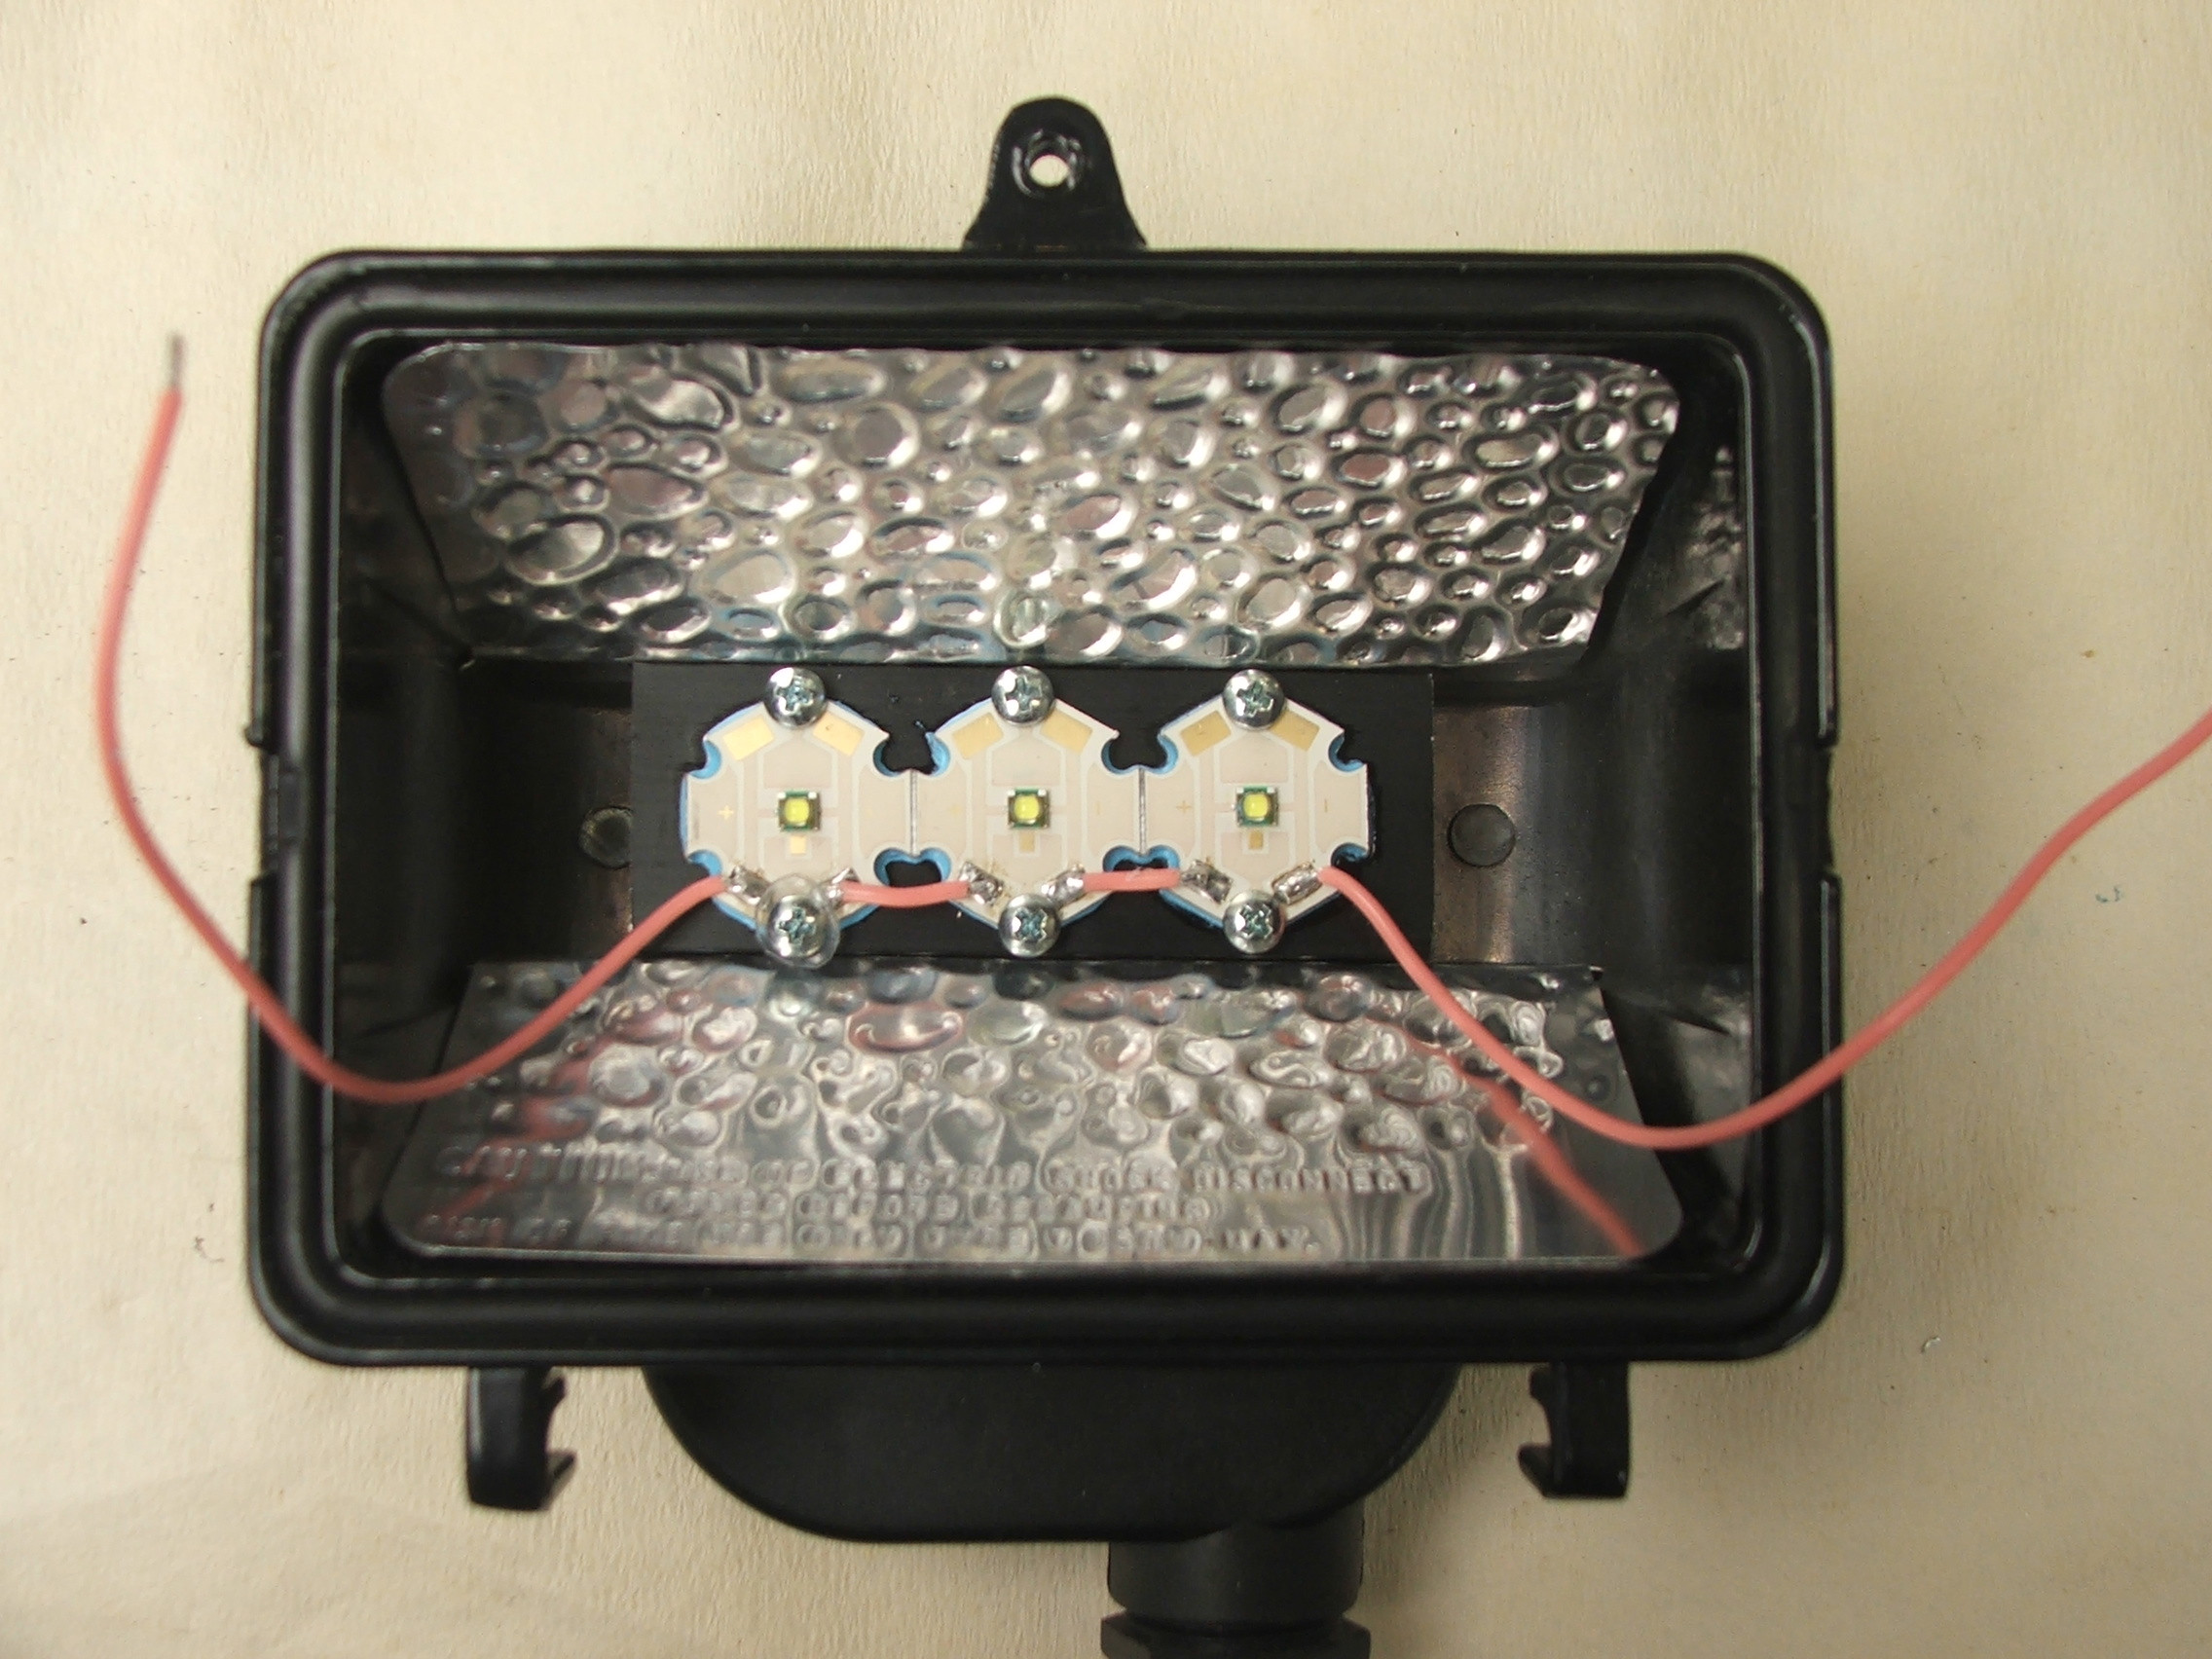 Best ideas about DIY Led Light
. Save or Pin Workshop LED light – DIY Walk through Now.